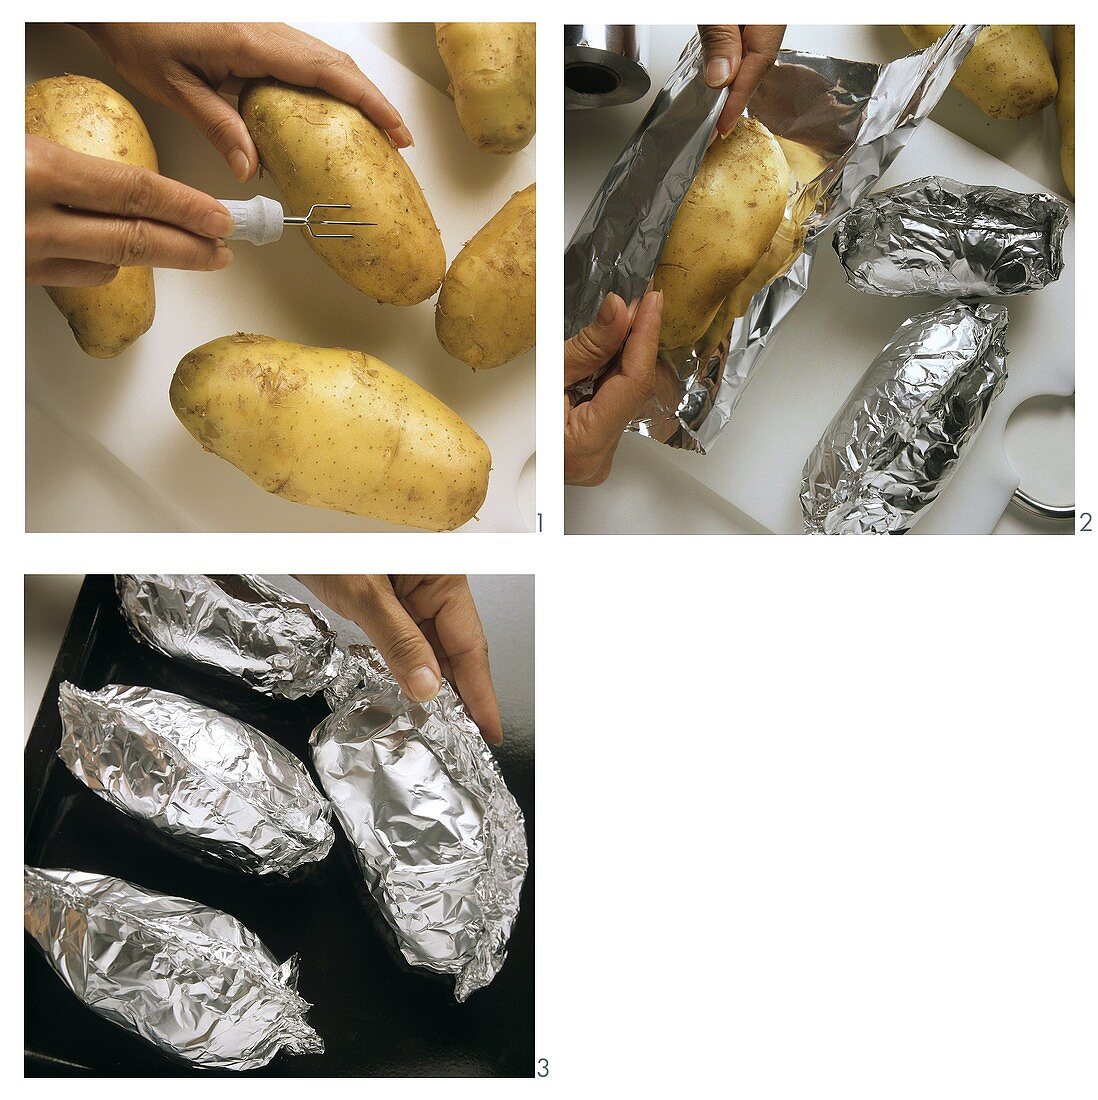 Preparing baked potatoes